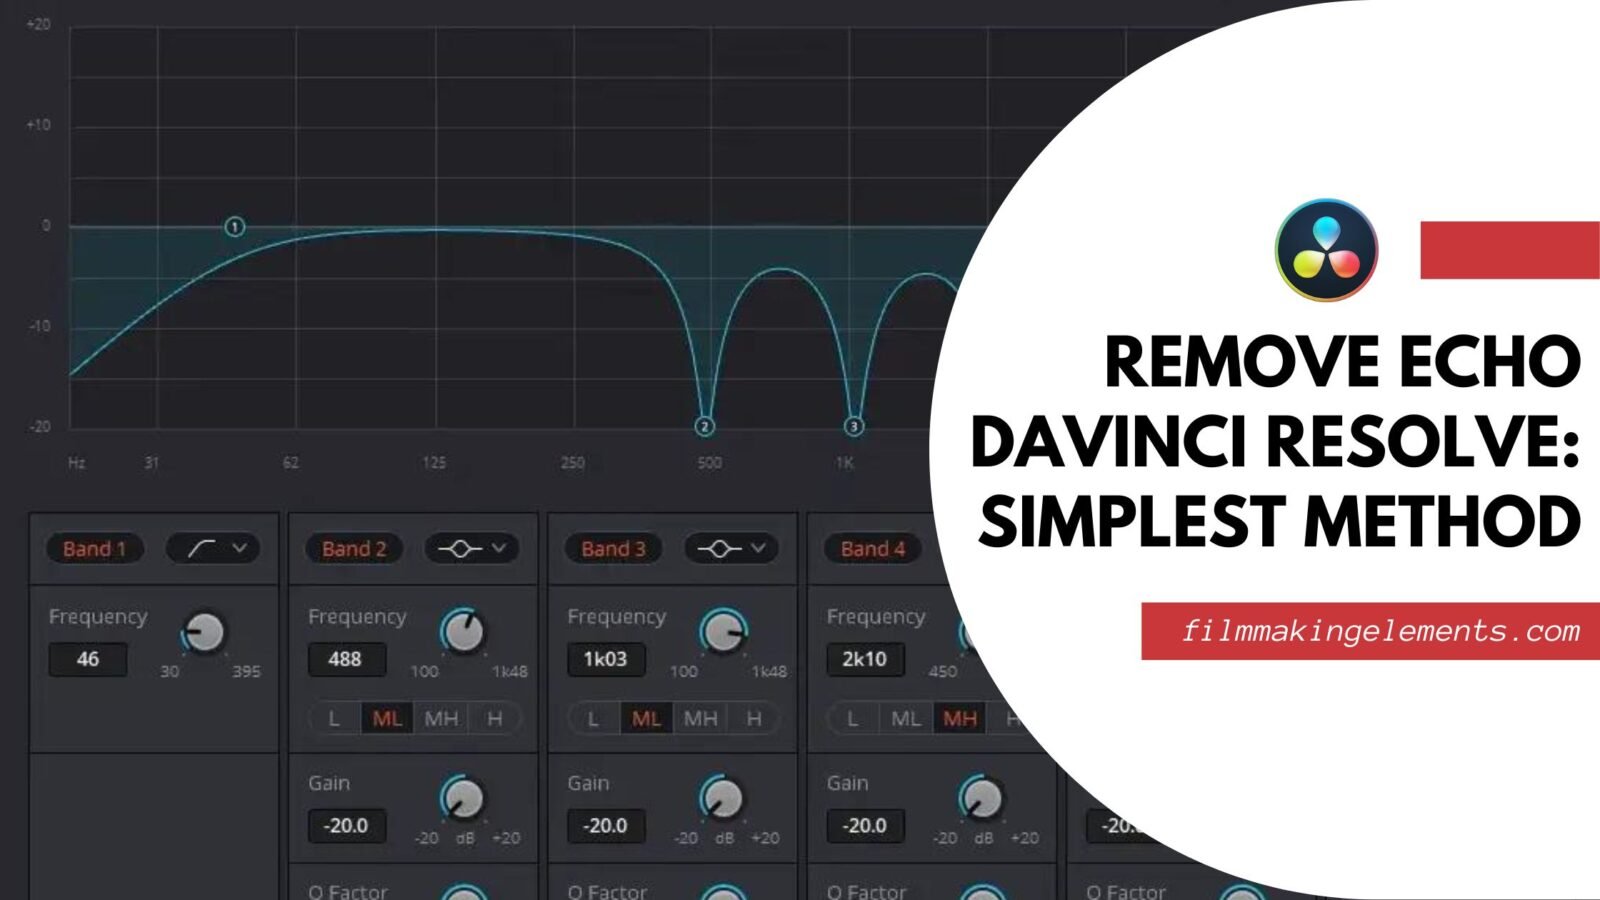 Remove Echo Davinci Resolve: Simplest Method